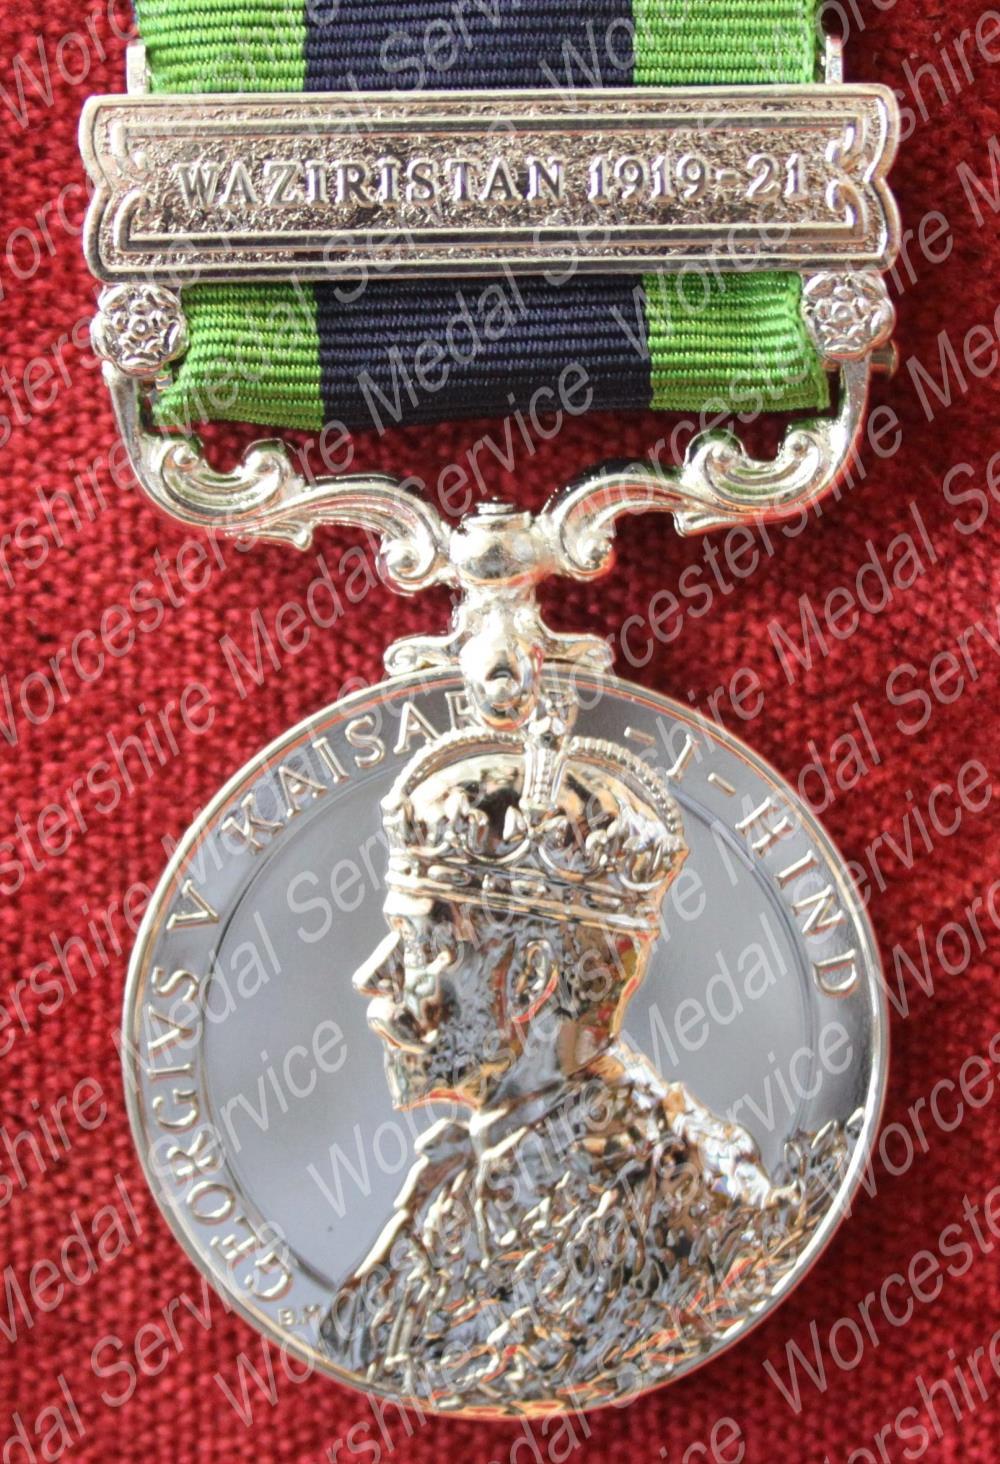 Worcestershire Medal Service: IGSM 1908-35 clasp Waziristan 1919-21